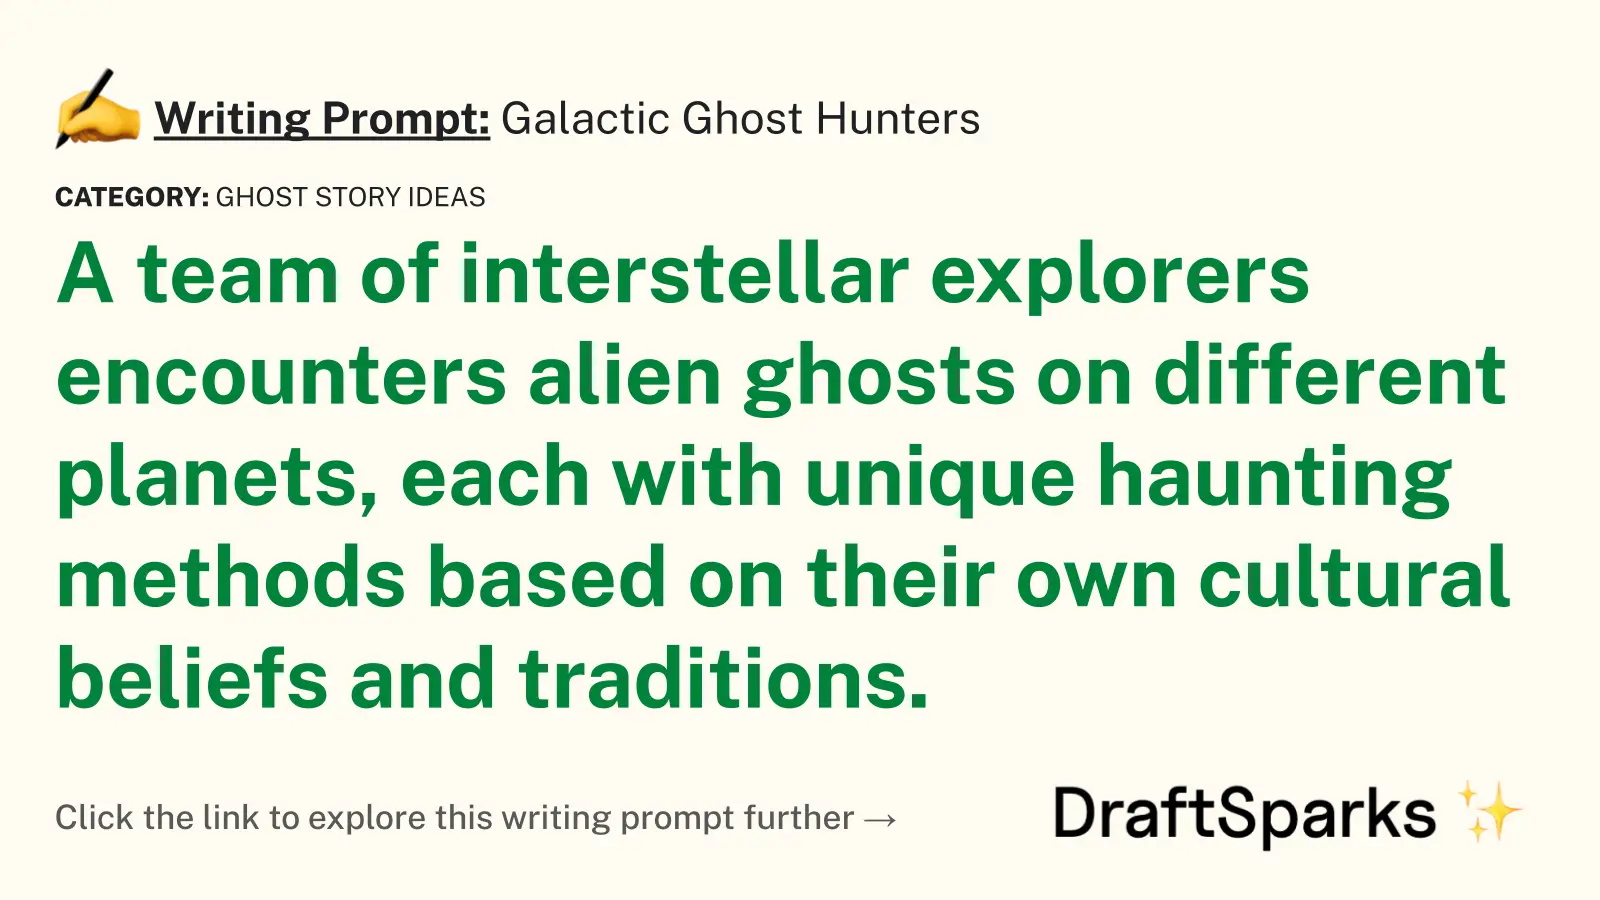 Galactic Ghost Hunters